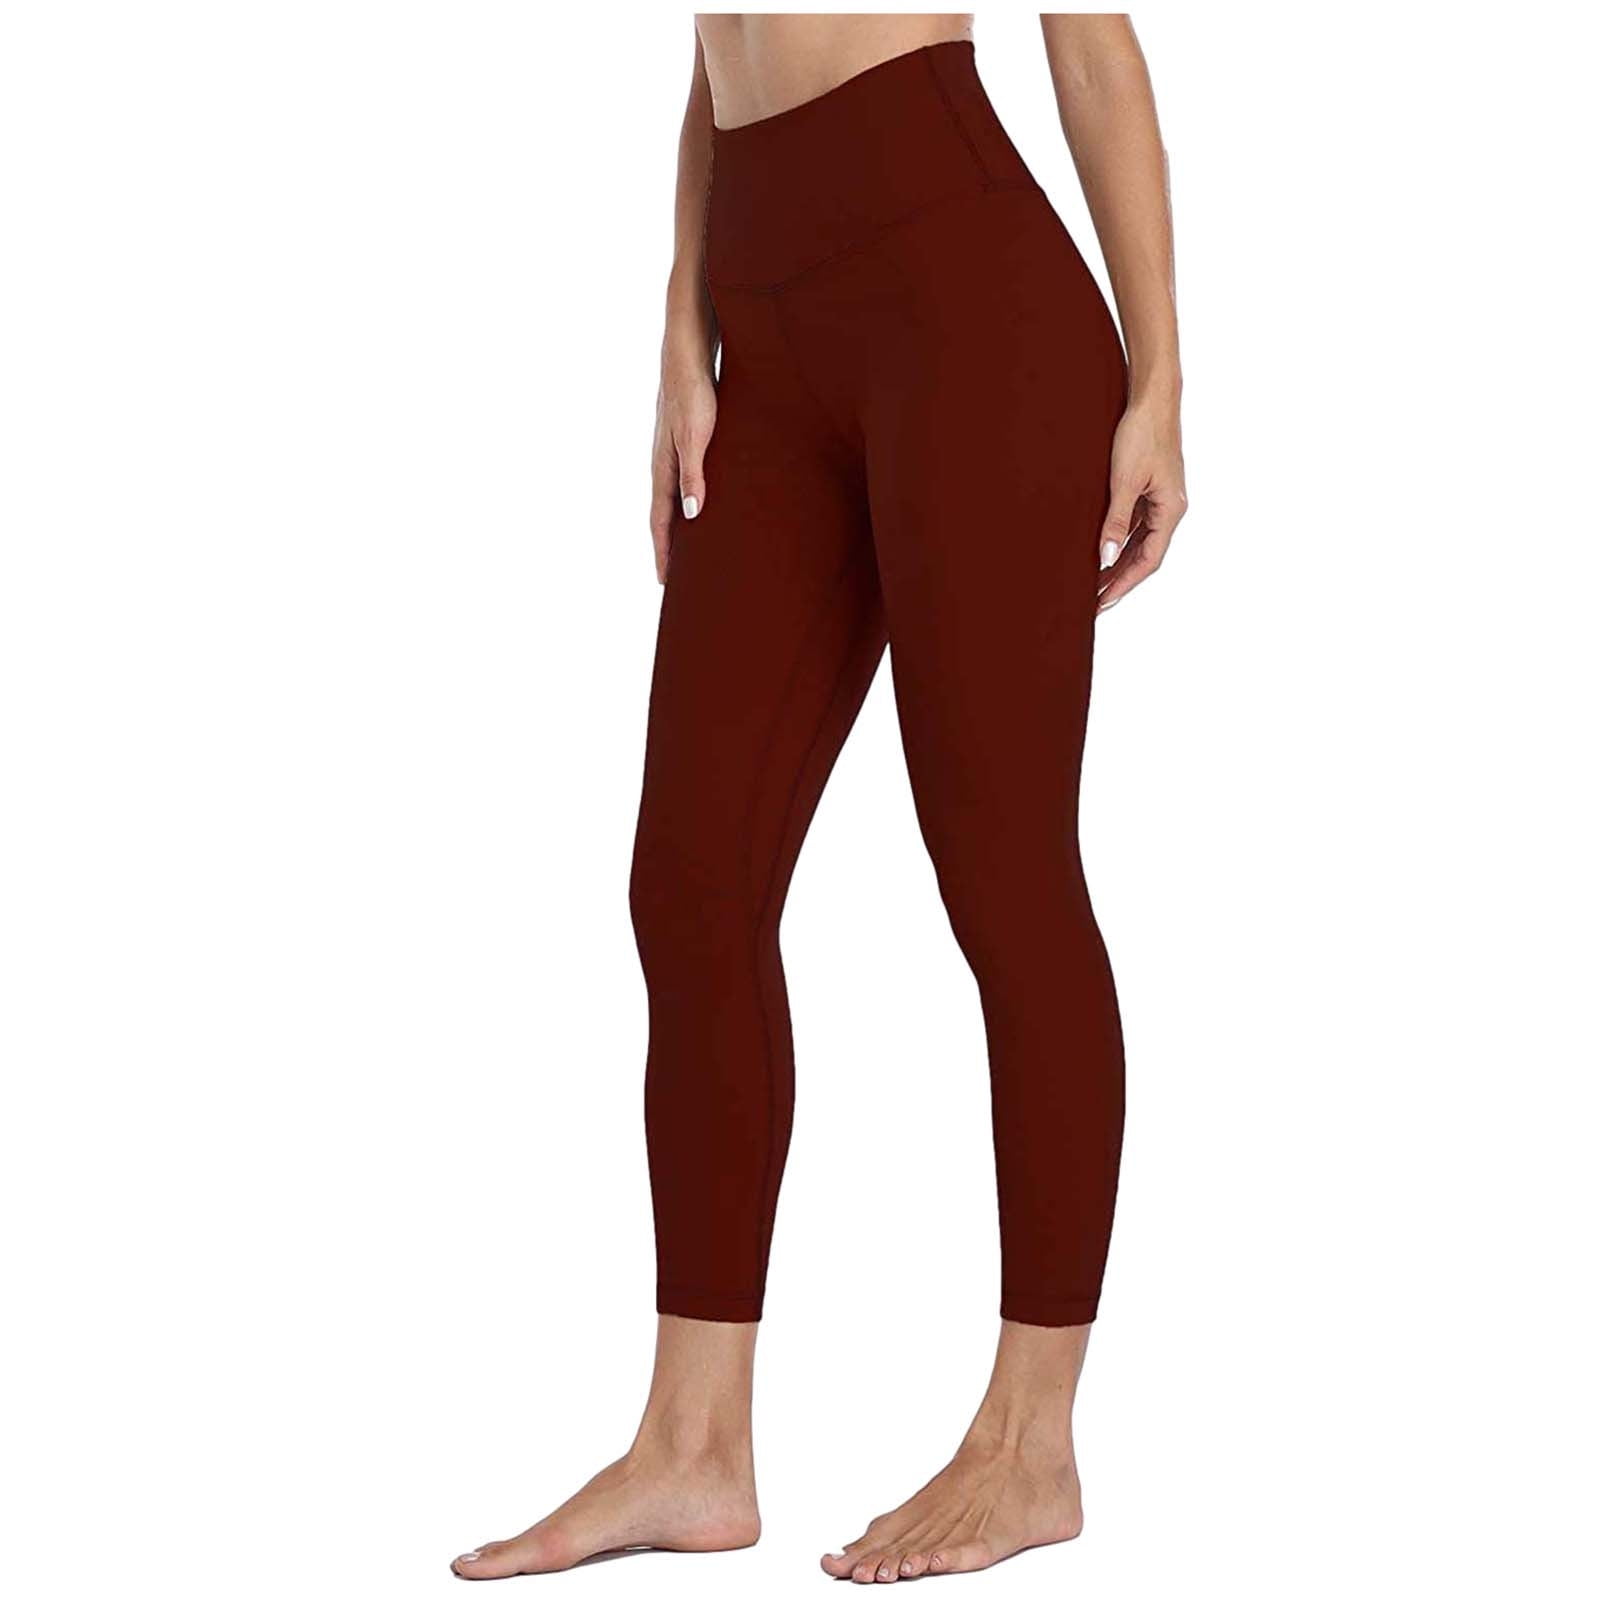 kpoplk Yoga Pants Women,Women Scrunch Workout Sports Leggings Lifting  Ruched Booty Yoga Pants with Pocket(Navy,XXL)